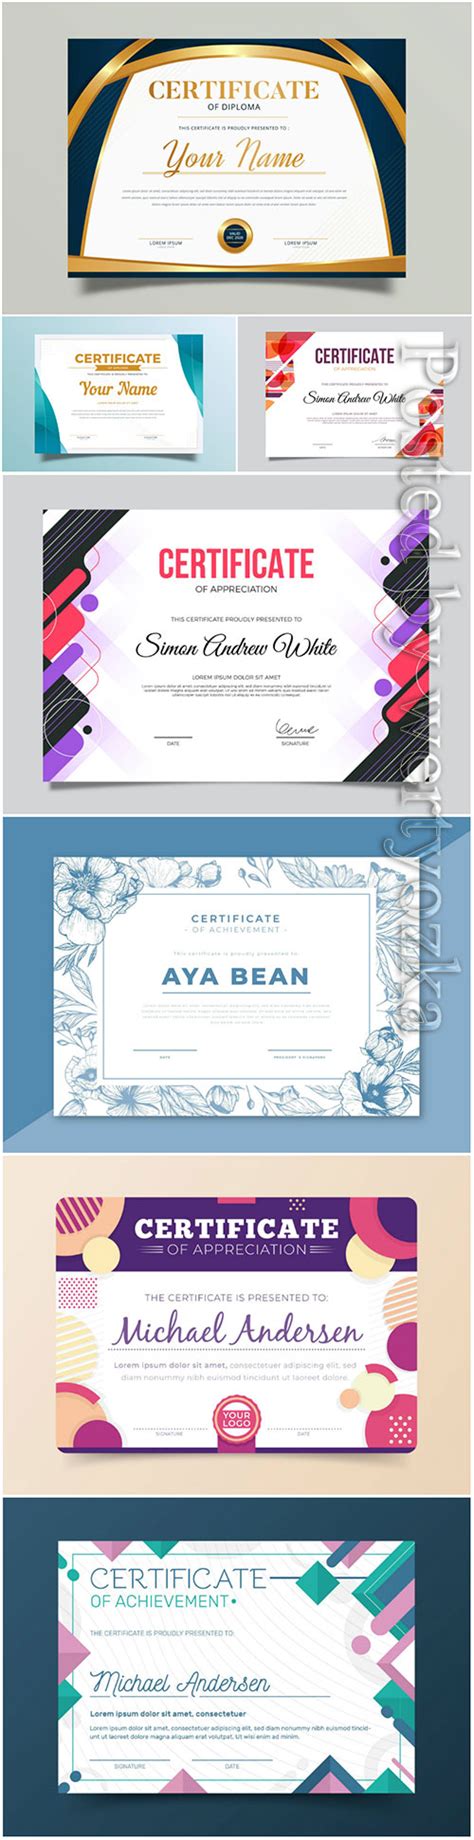 Certificates And Diplomas Templates In Vector Heroturko Graphic